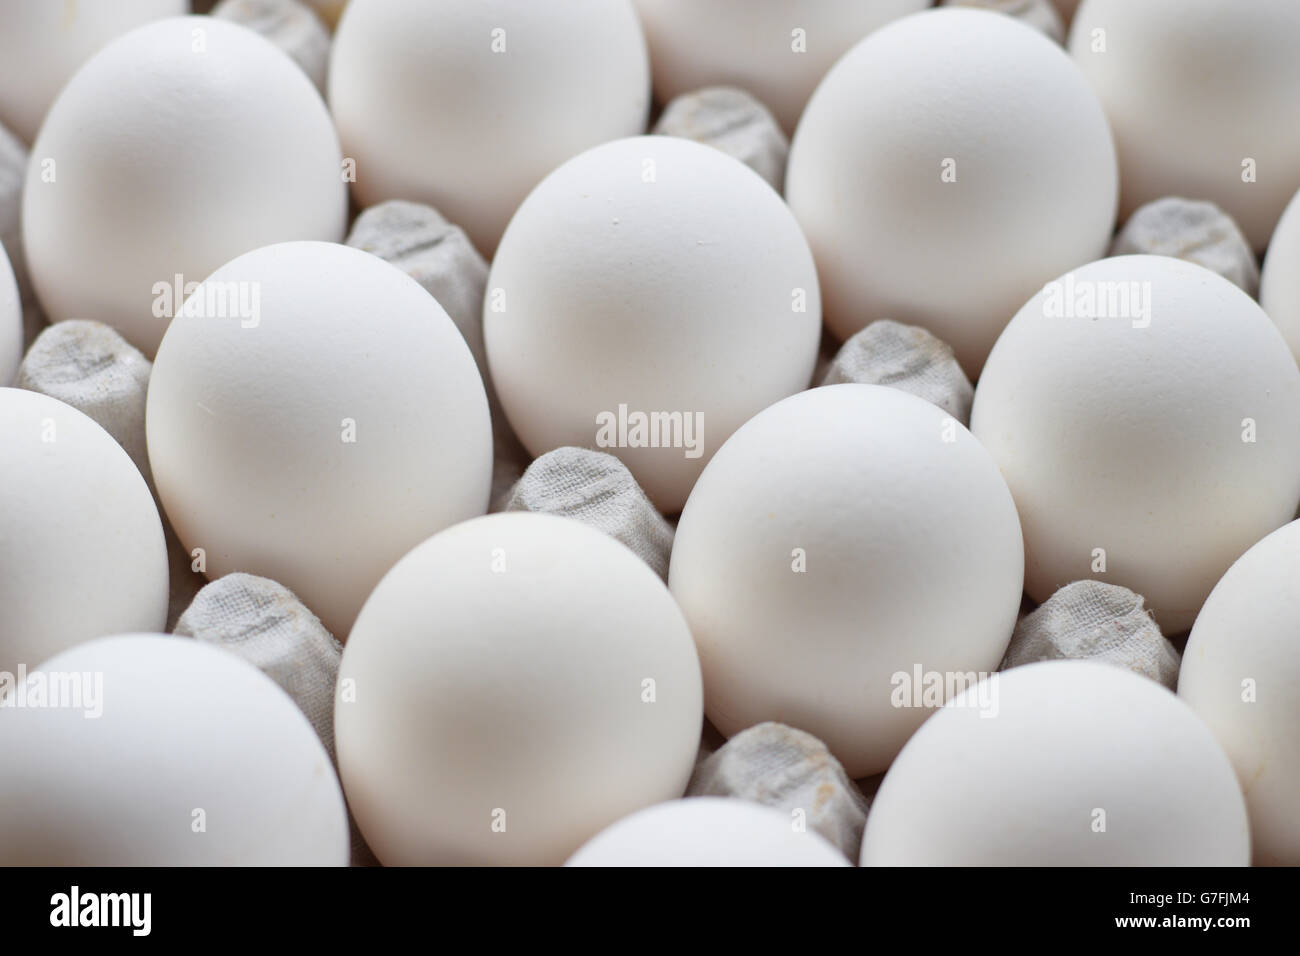 Eggs, proteins, breakfast, white eggs Stock Photo